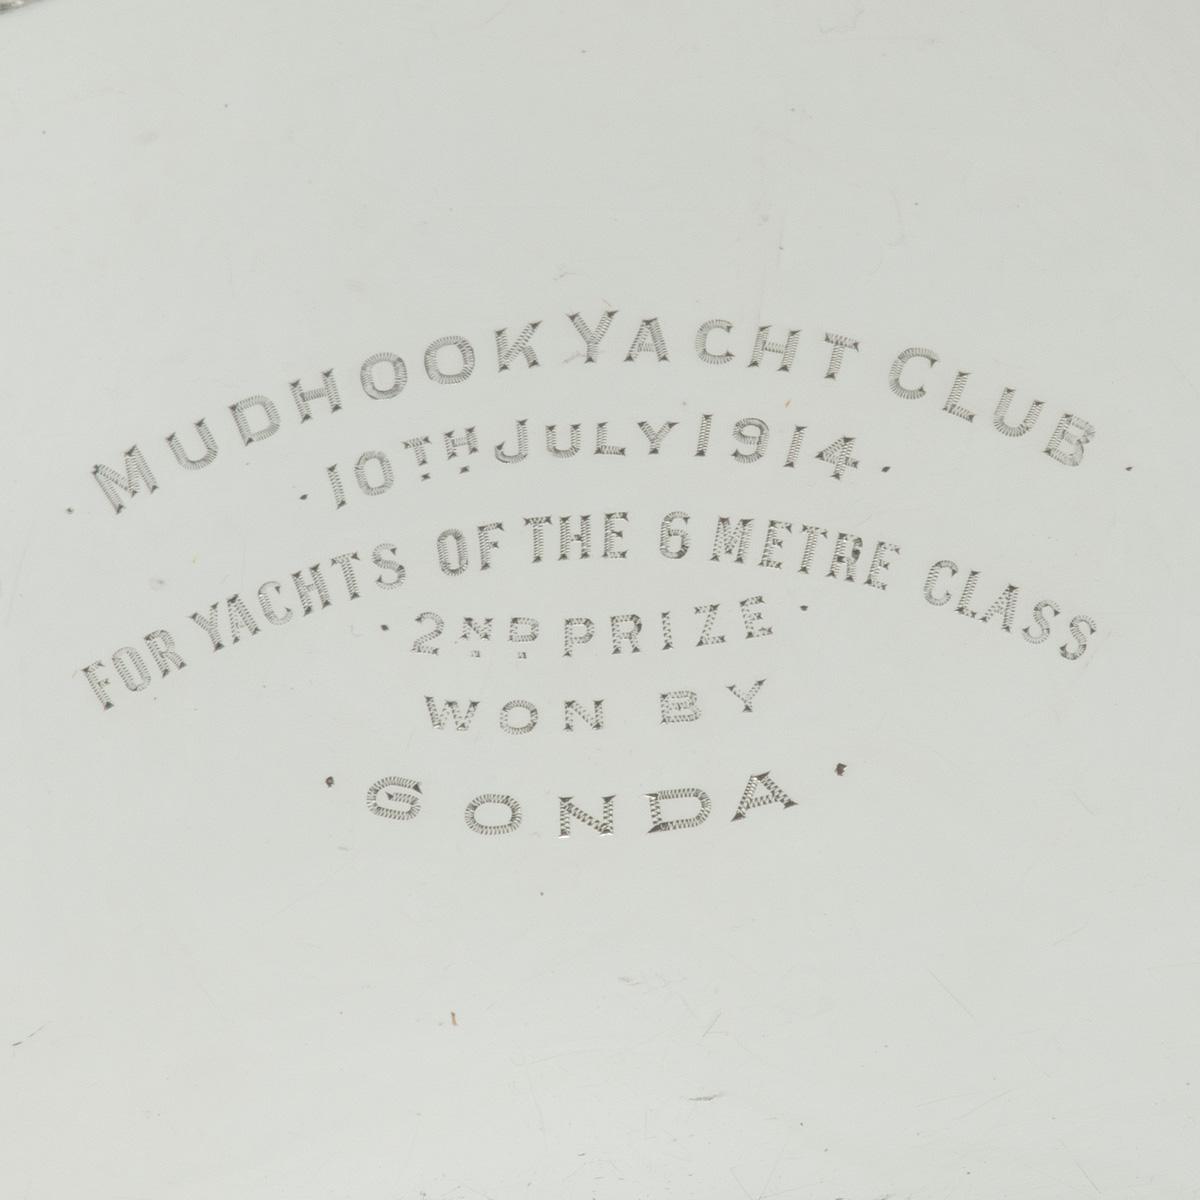 A Mudhook Yacht Club racing prize